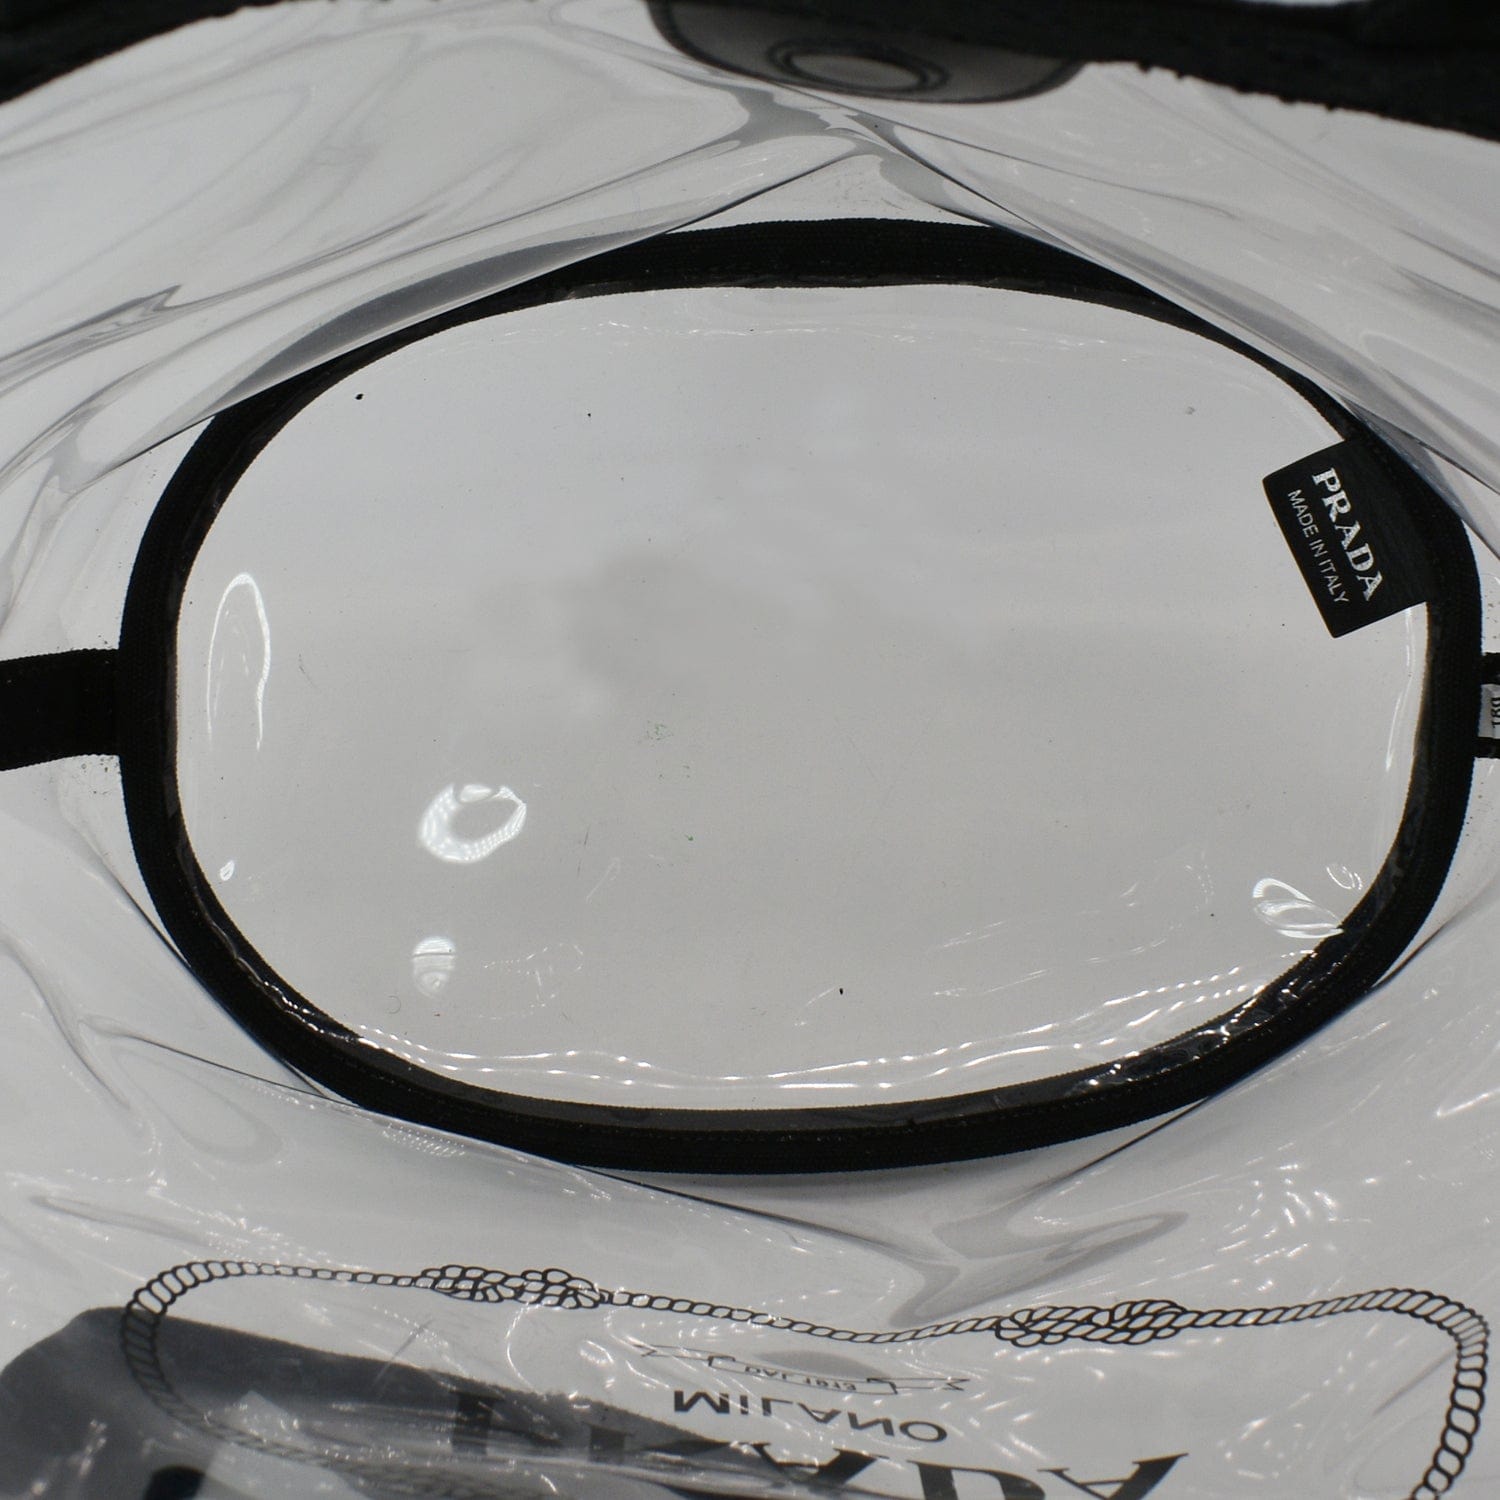 PRADA Plexiglass Canapa Small Shopper Tote Bag Black